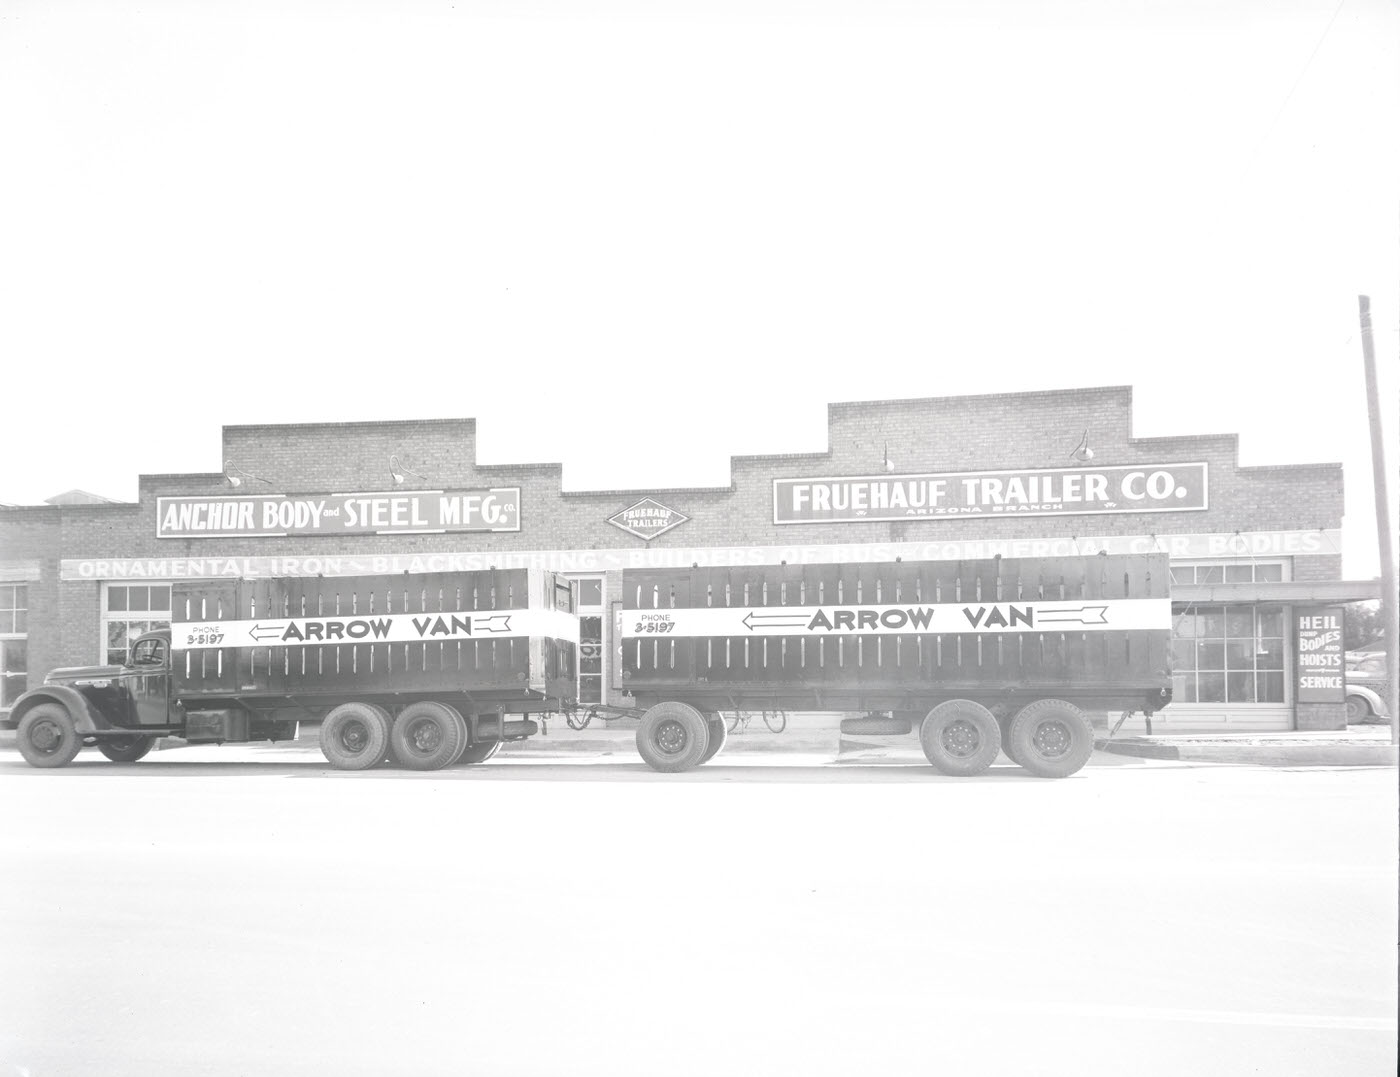 Fruehauf Trailer Co. Building Exterior and Trucks, 1941